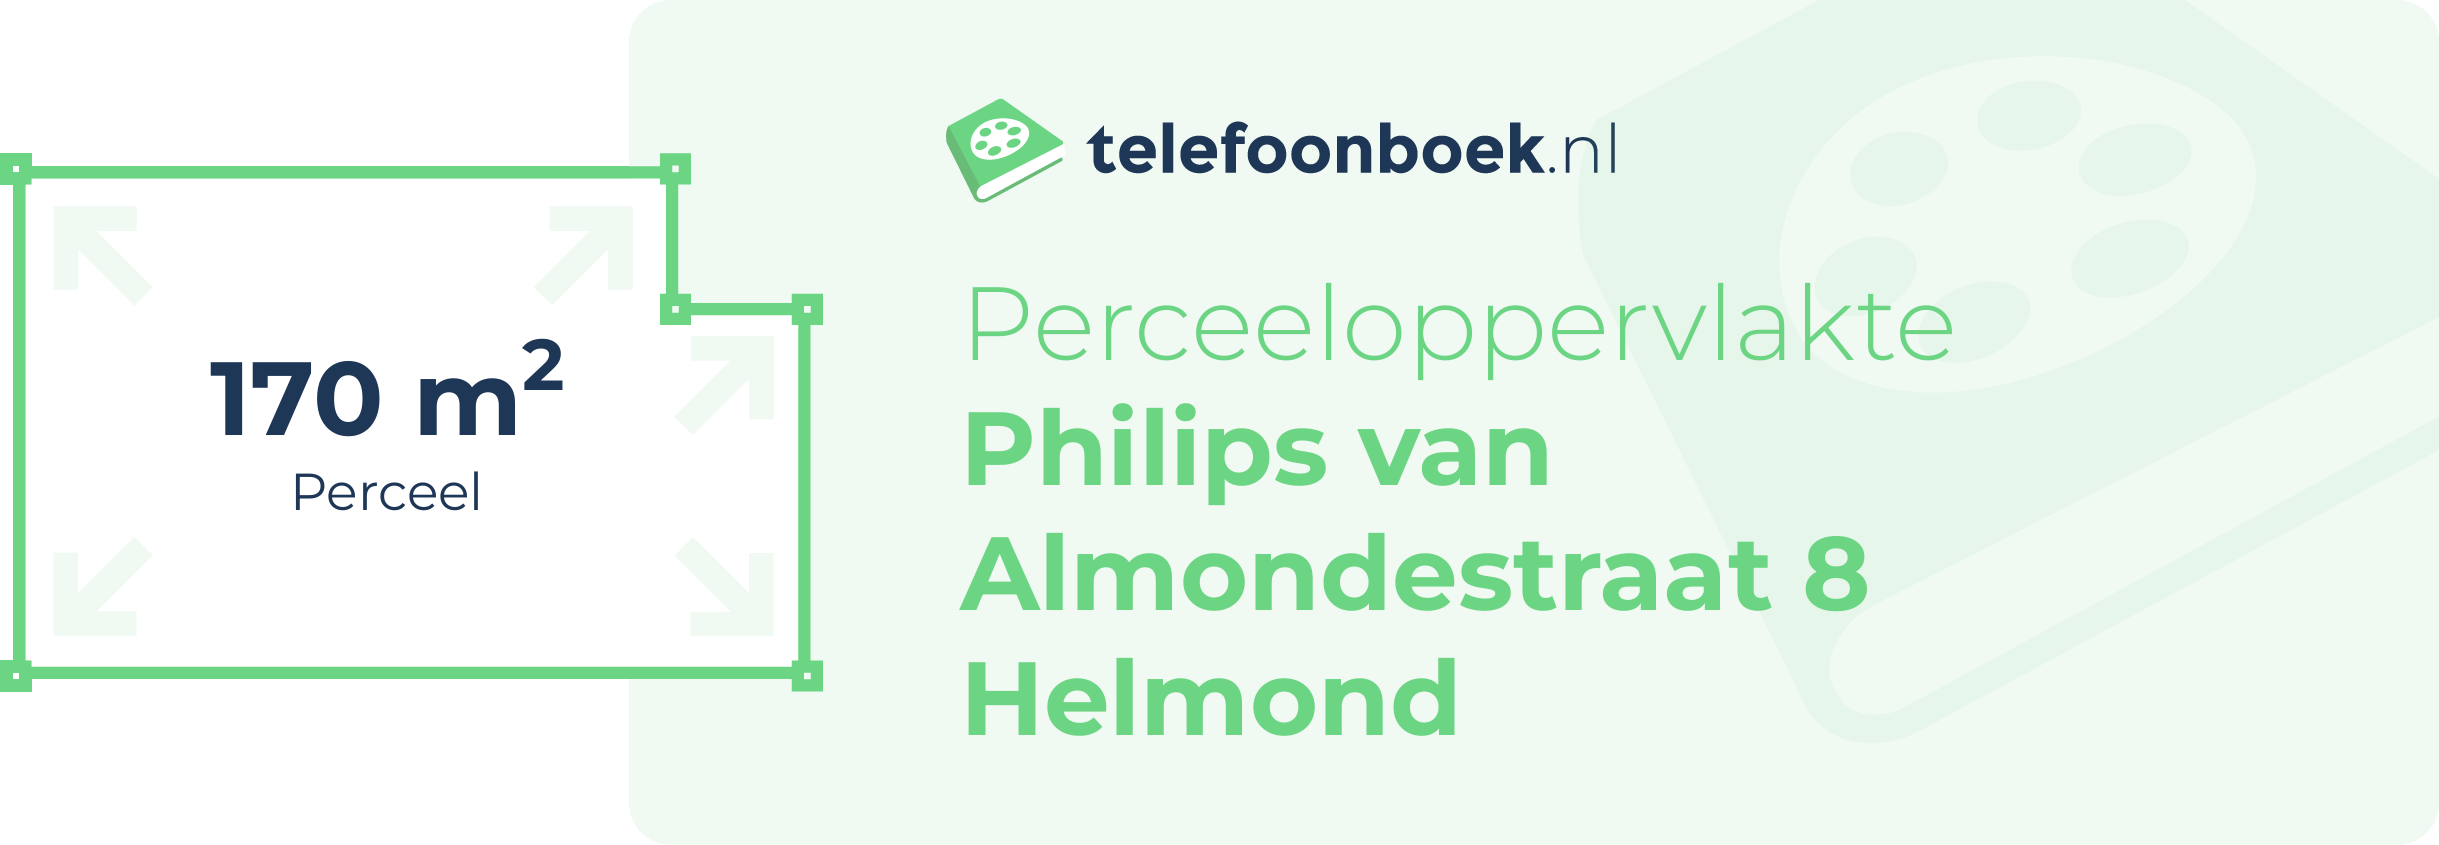 Perceeloppervlakte Philips Van Almondestraat 8 Helmond